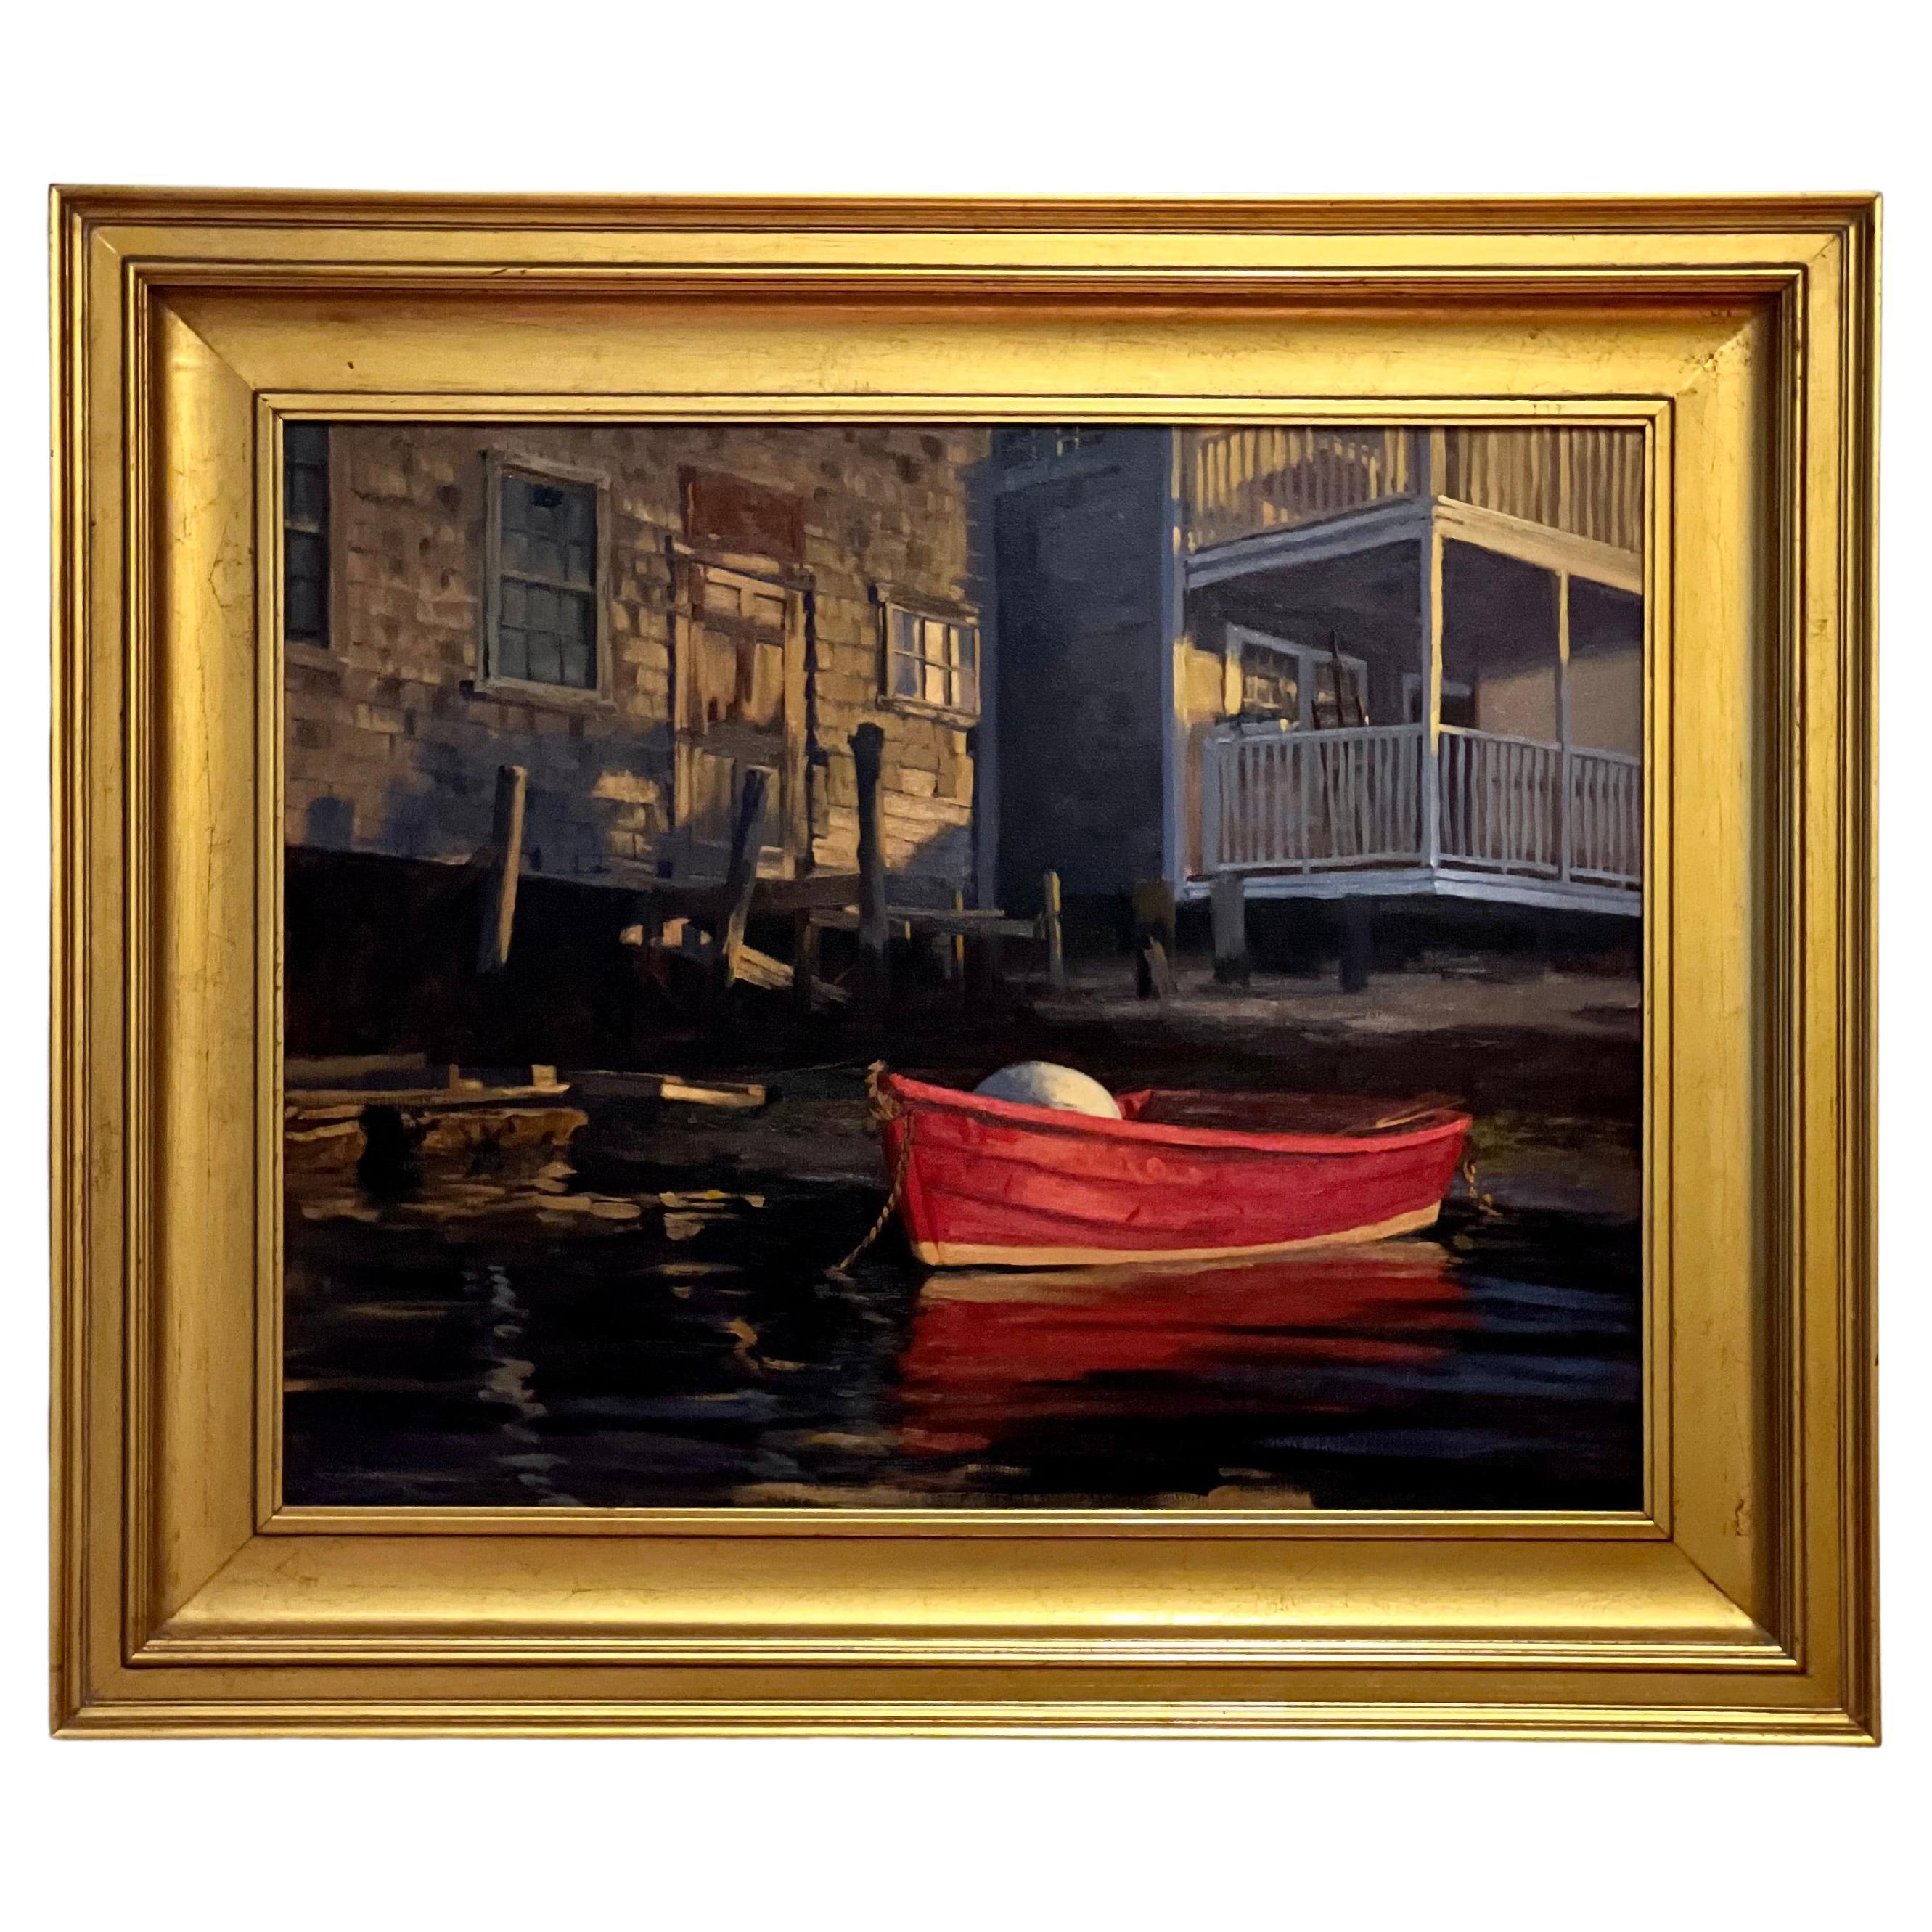 Louis Guarnaccia (b. 1958), Easy Street Boat Basin, Nantucket. 

A fine realist work in oil on linen. Charming red boat scene on the island of Nantucket, Massachusetts. Signed on lower left and back. 

Unframed: 30